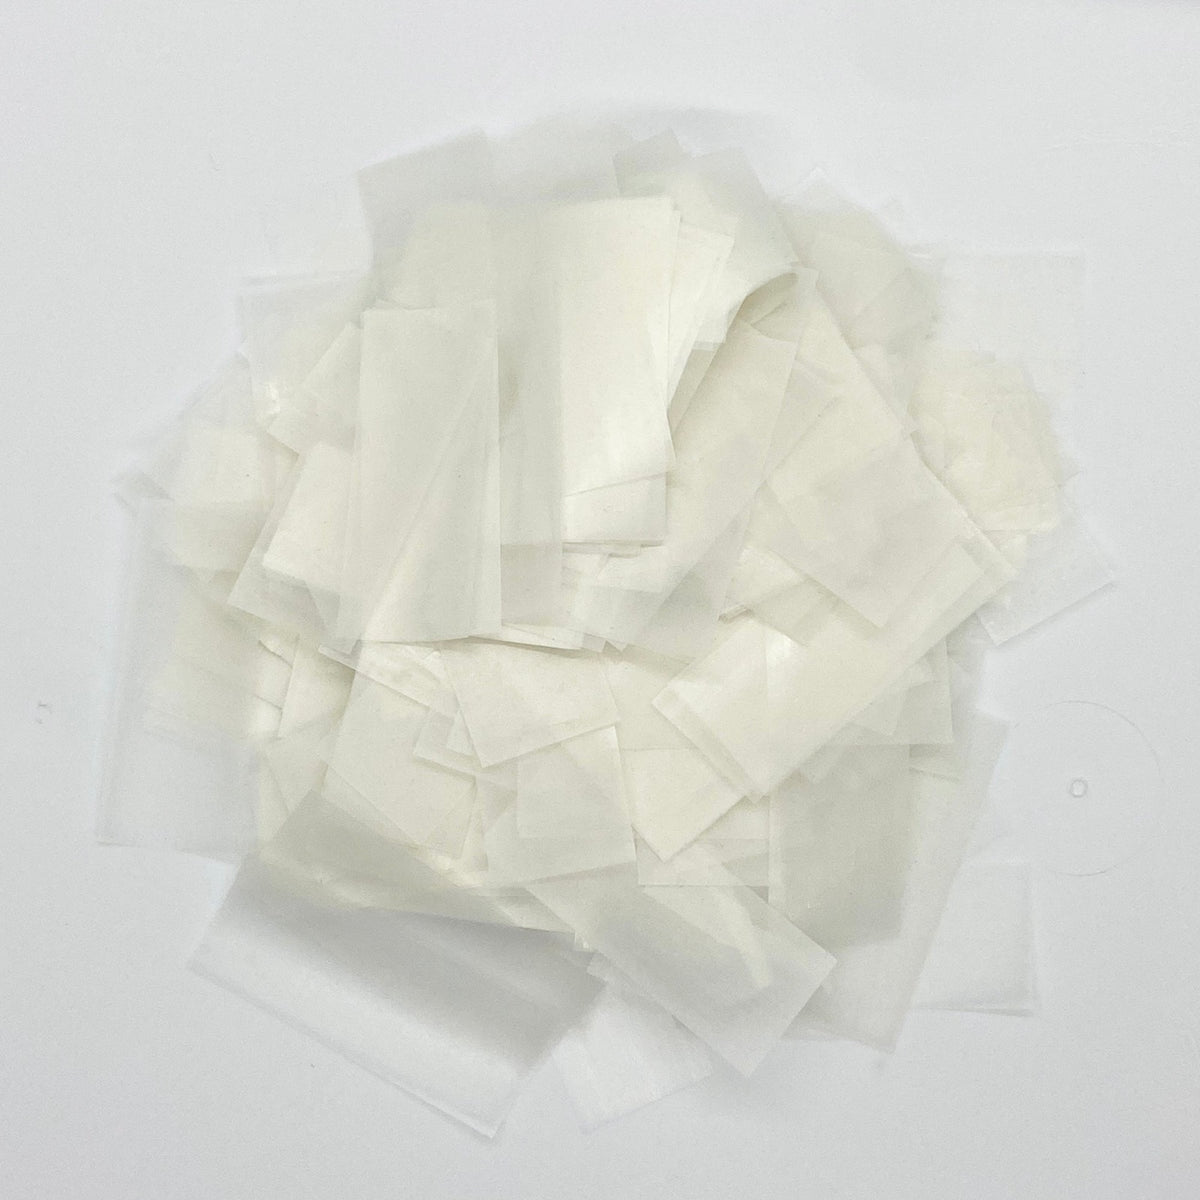 White Rice Paper - Water Soluble Dissolving Confetti (1 Pound Bulk)